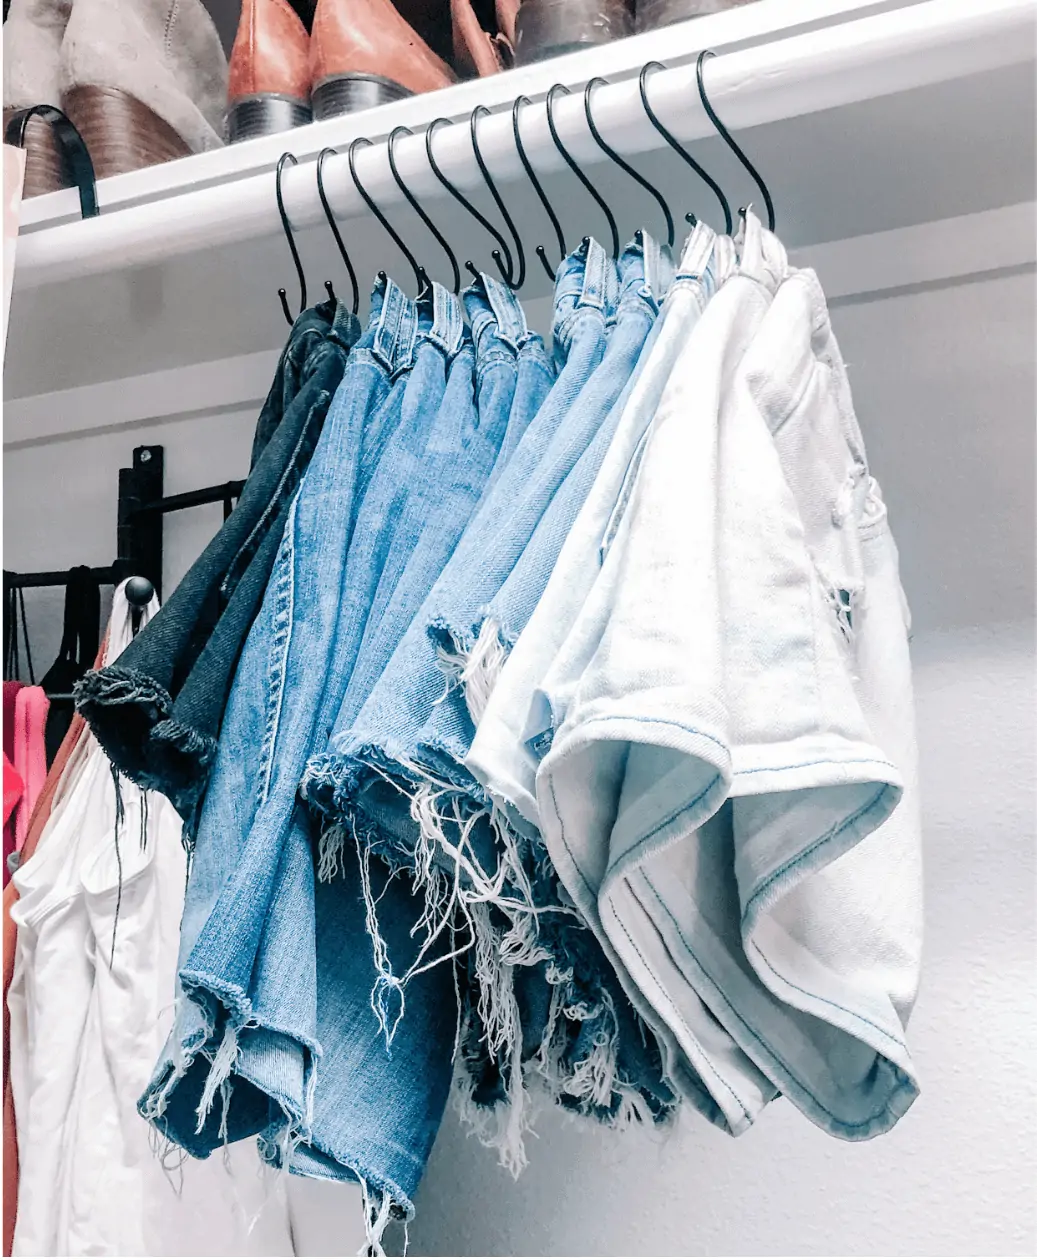 jean shorts organized in closet on S hooks